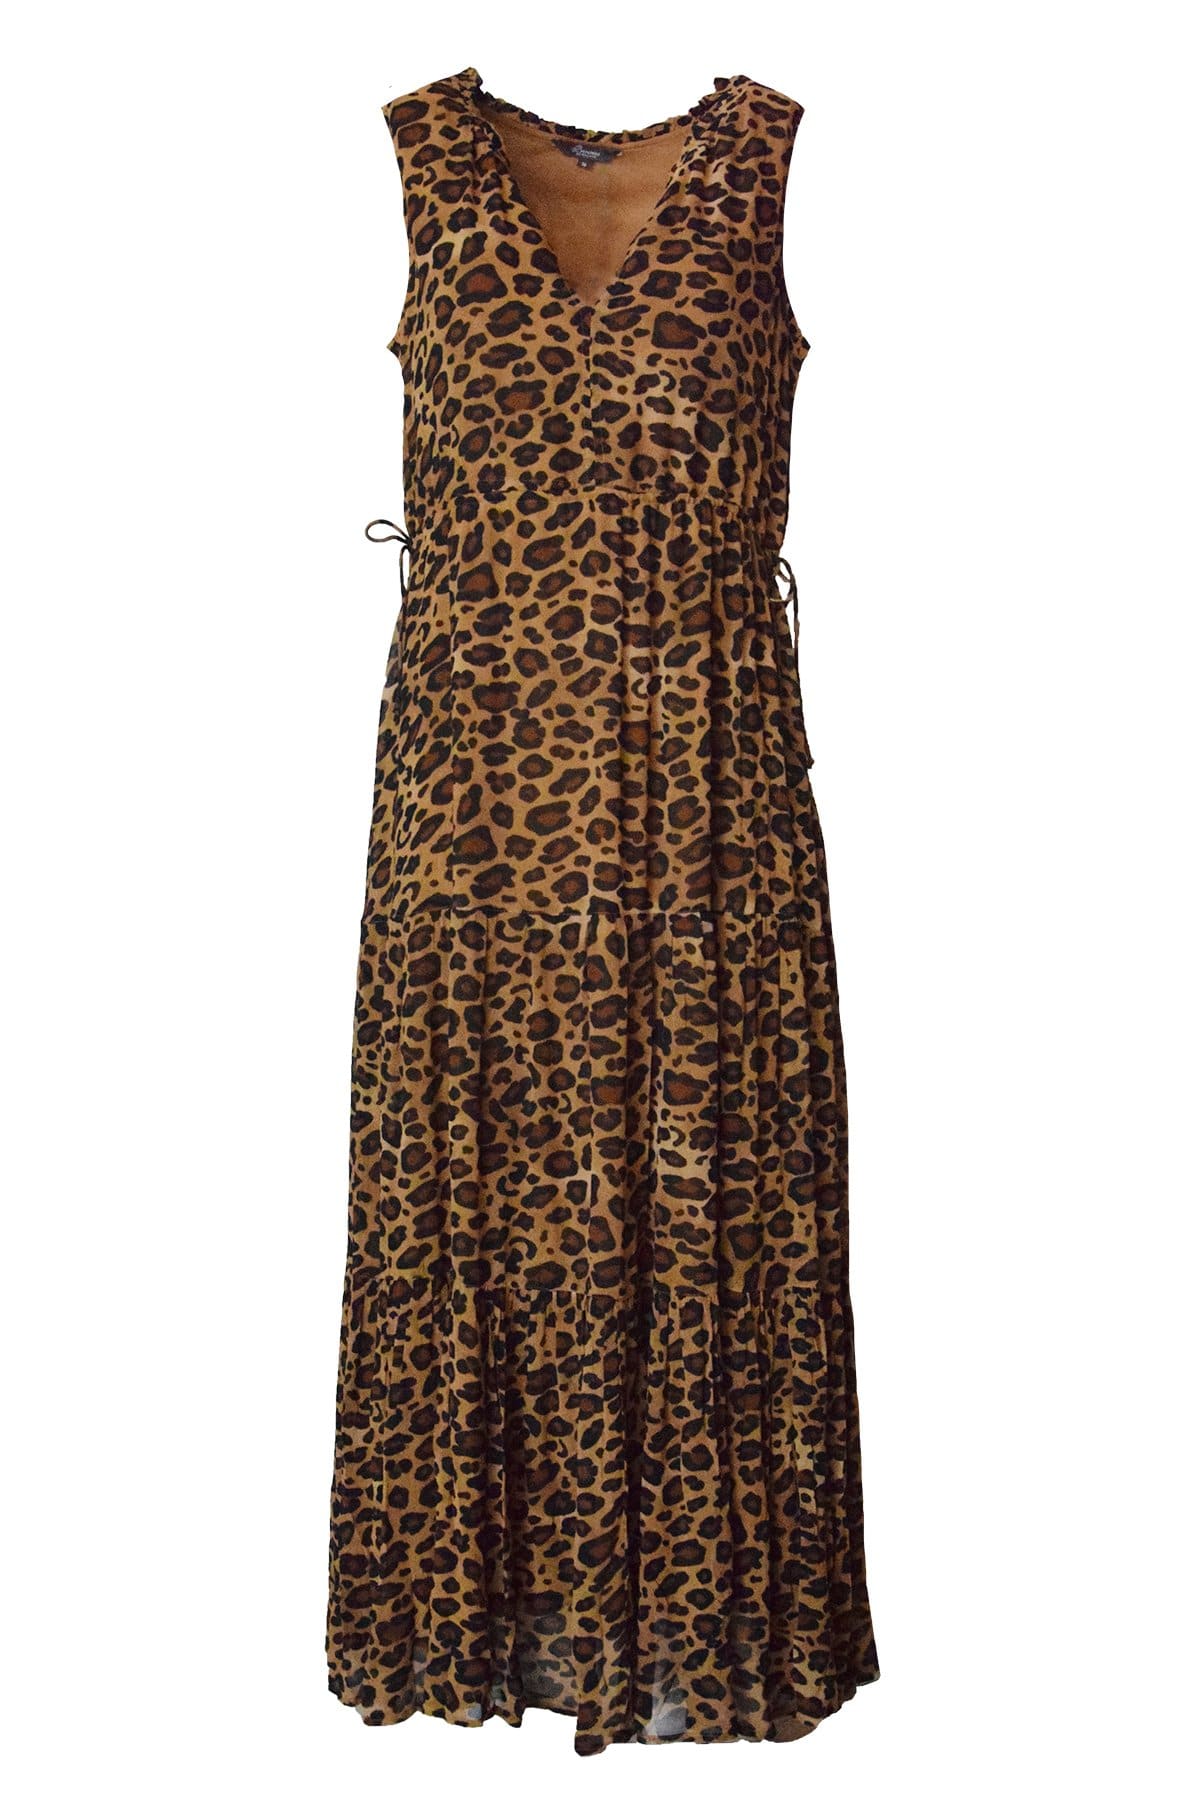 Princess goes Hollywood kjole lang leopard 188 189758 2655